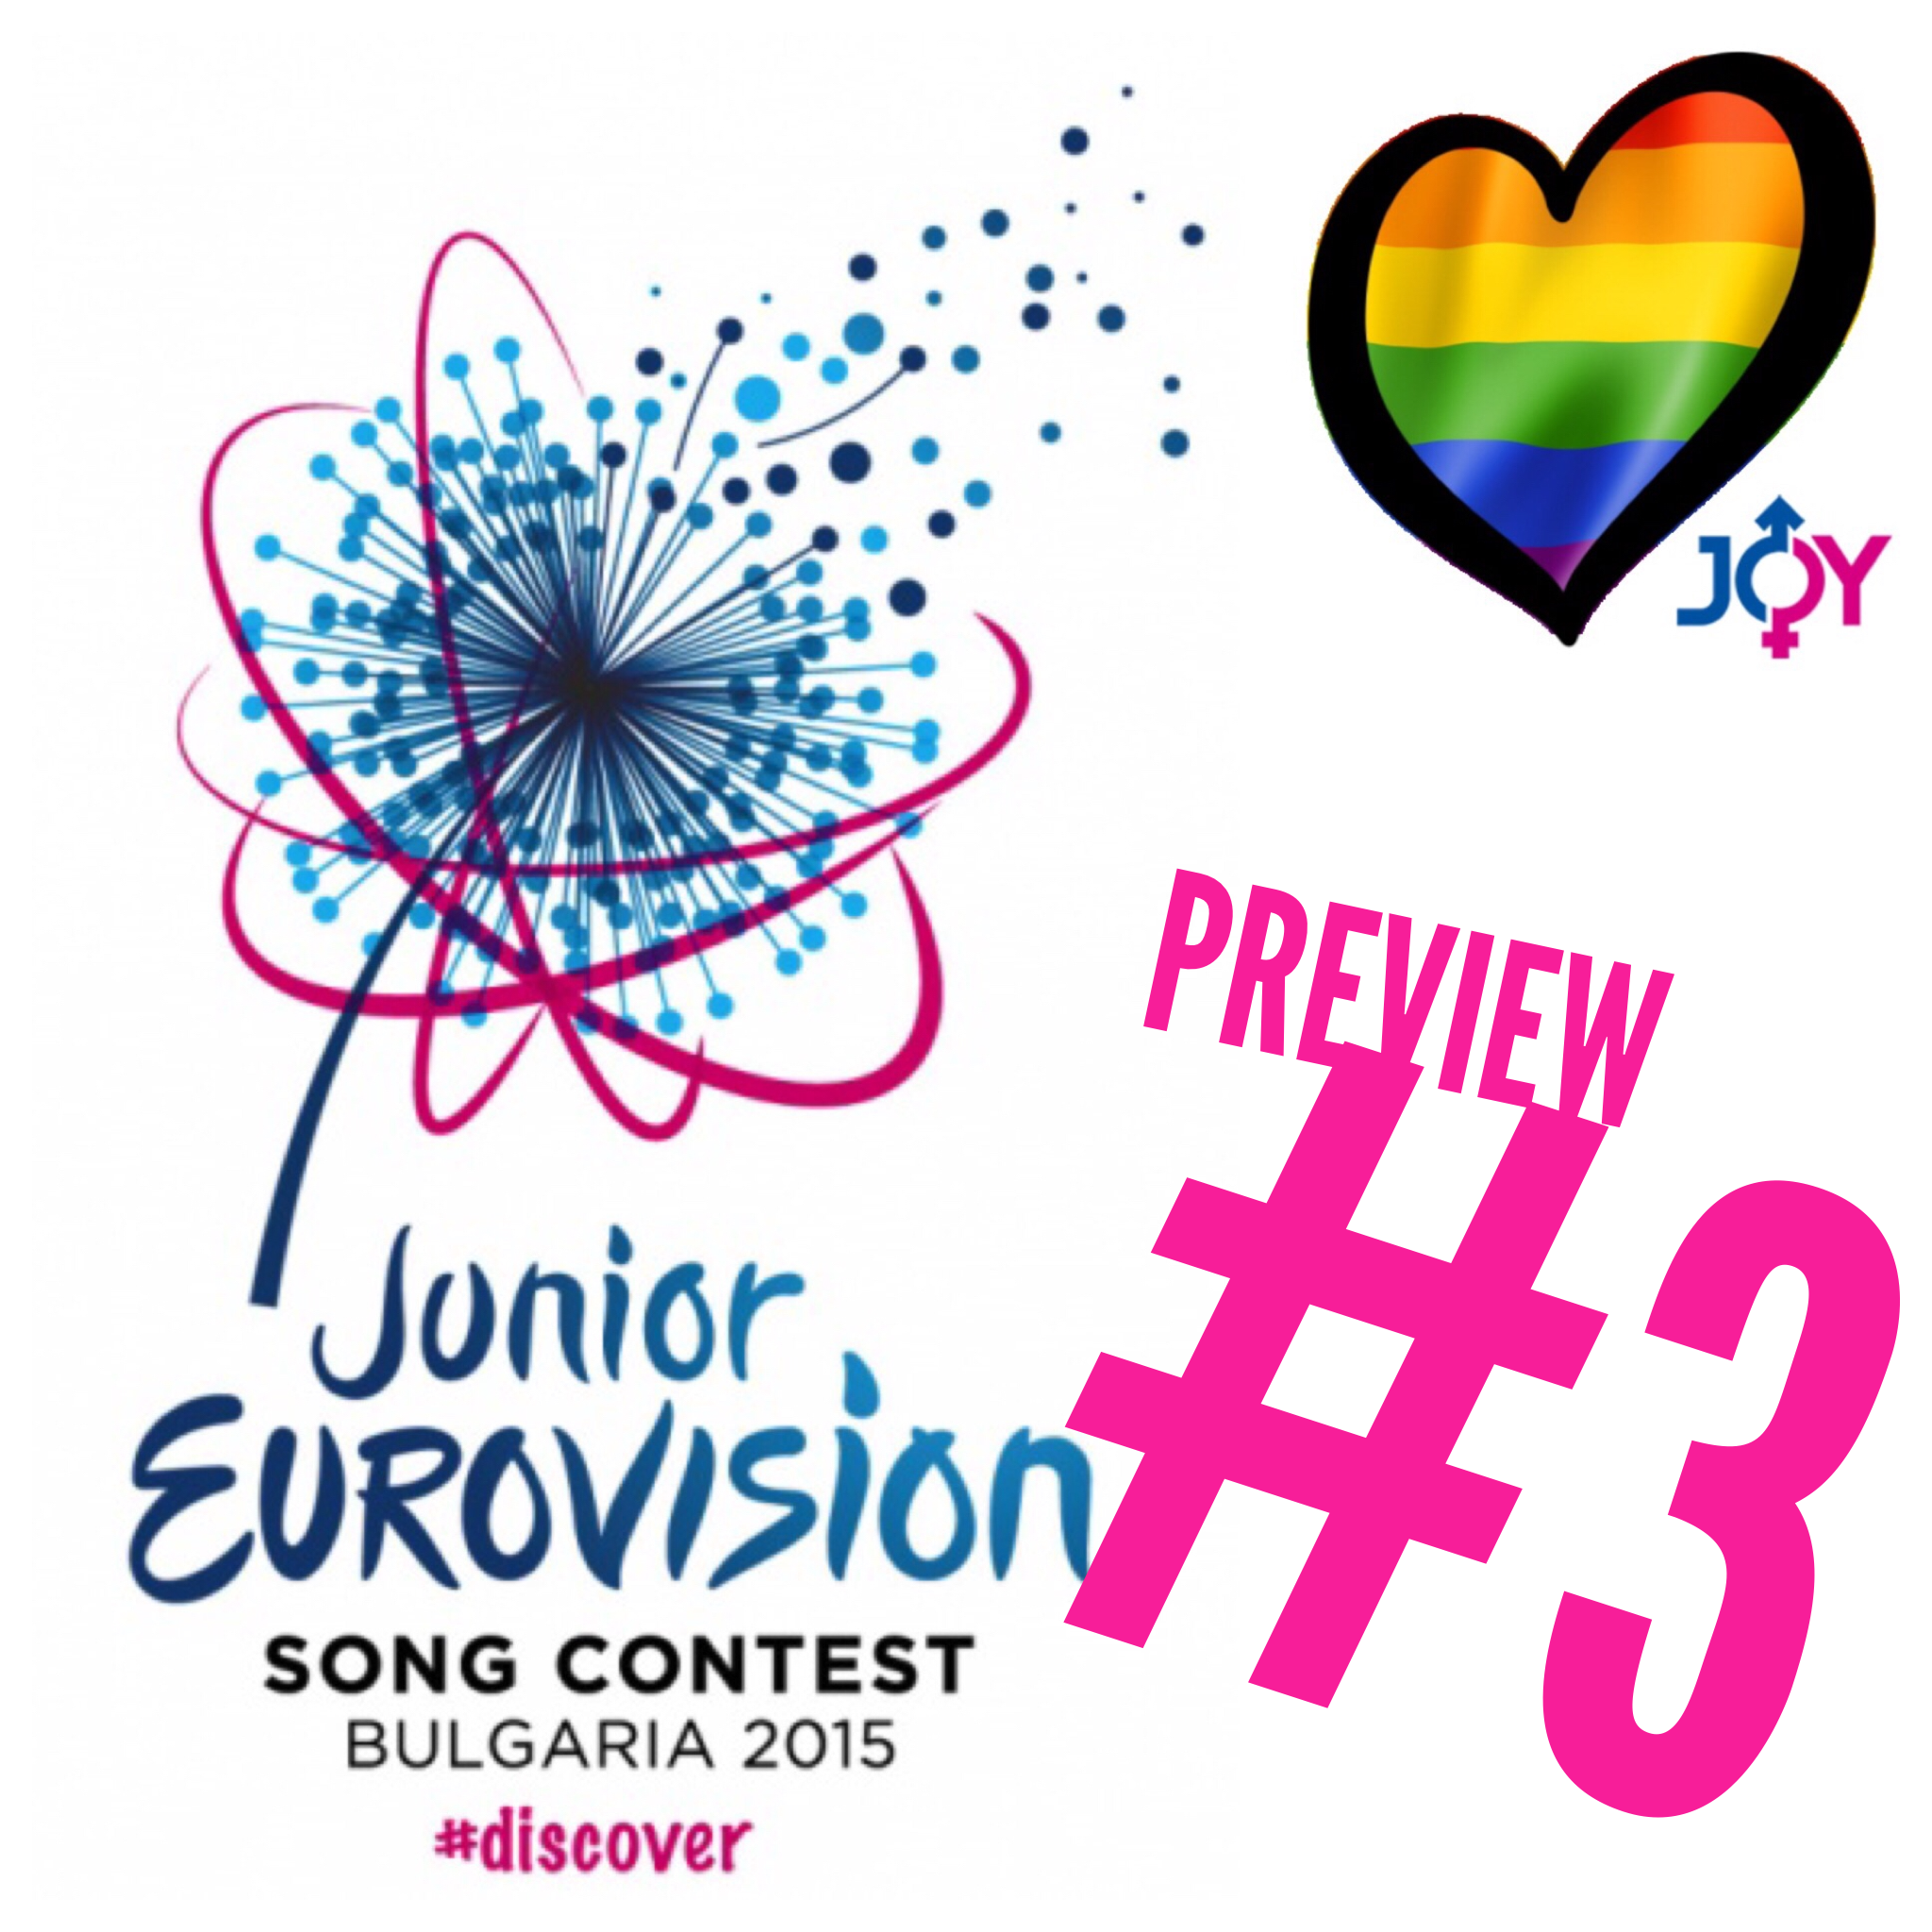 Junior Eurovision 2015: Preview #3